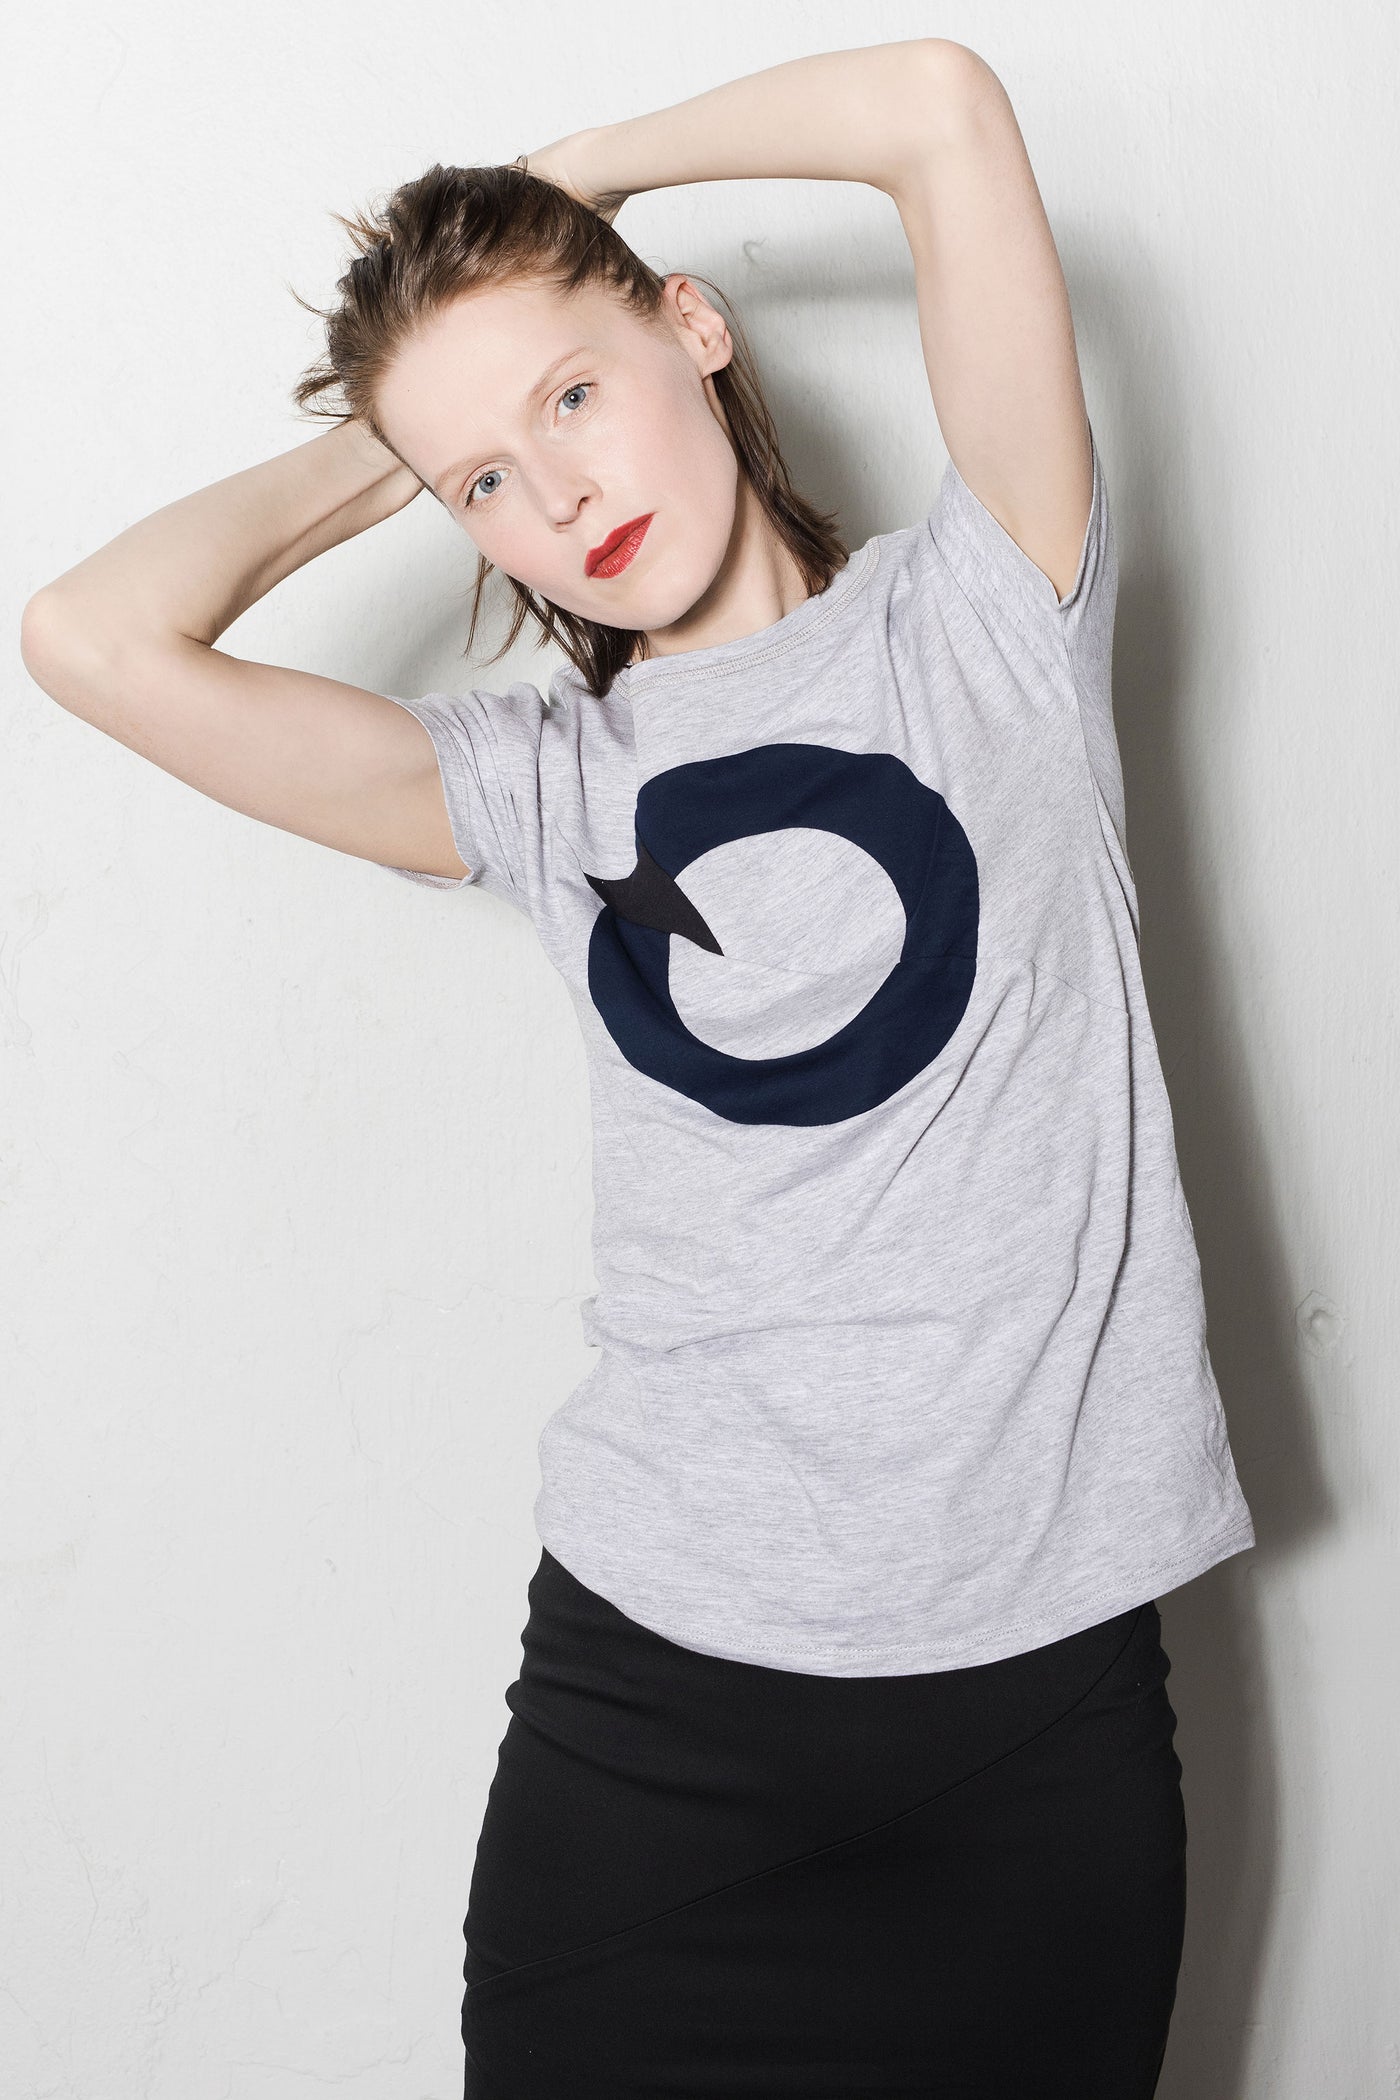 Up-shirt for women, circle motif | Light grey, black - Reet Aus